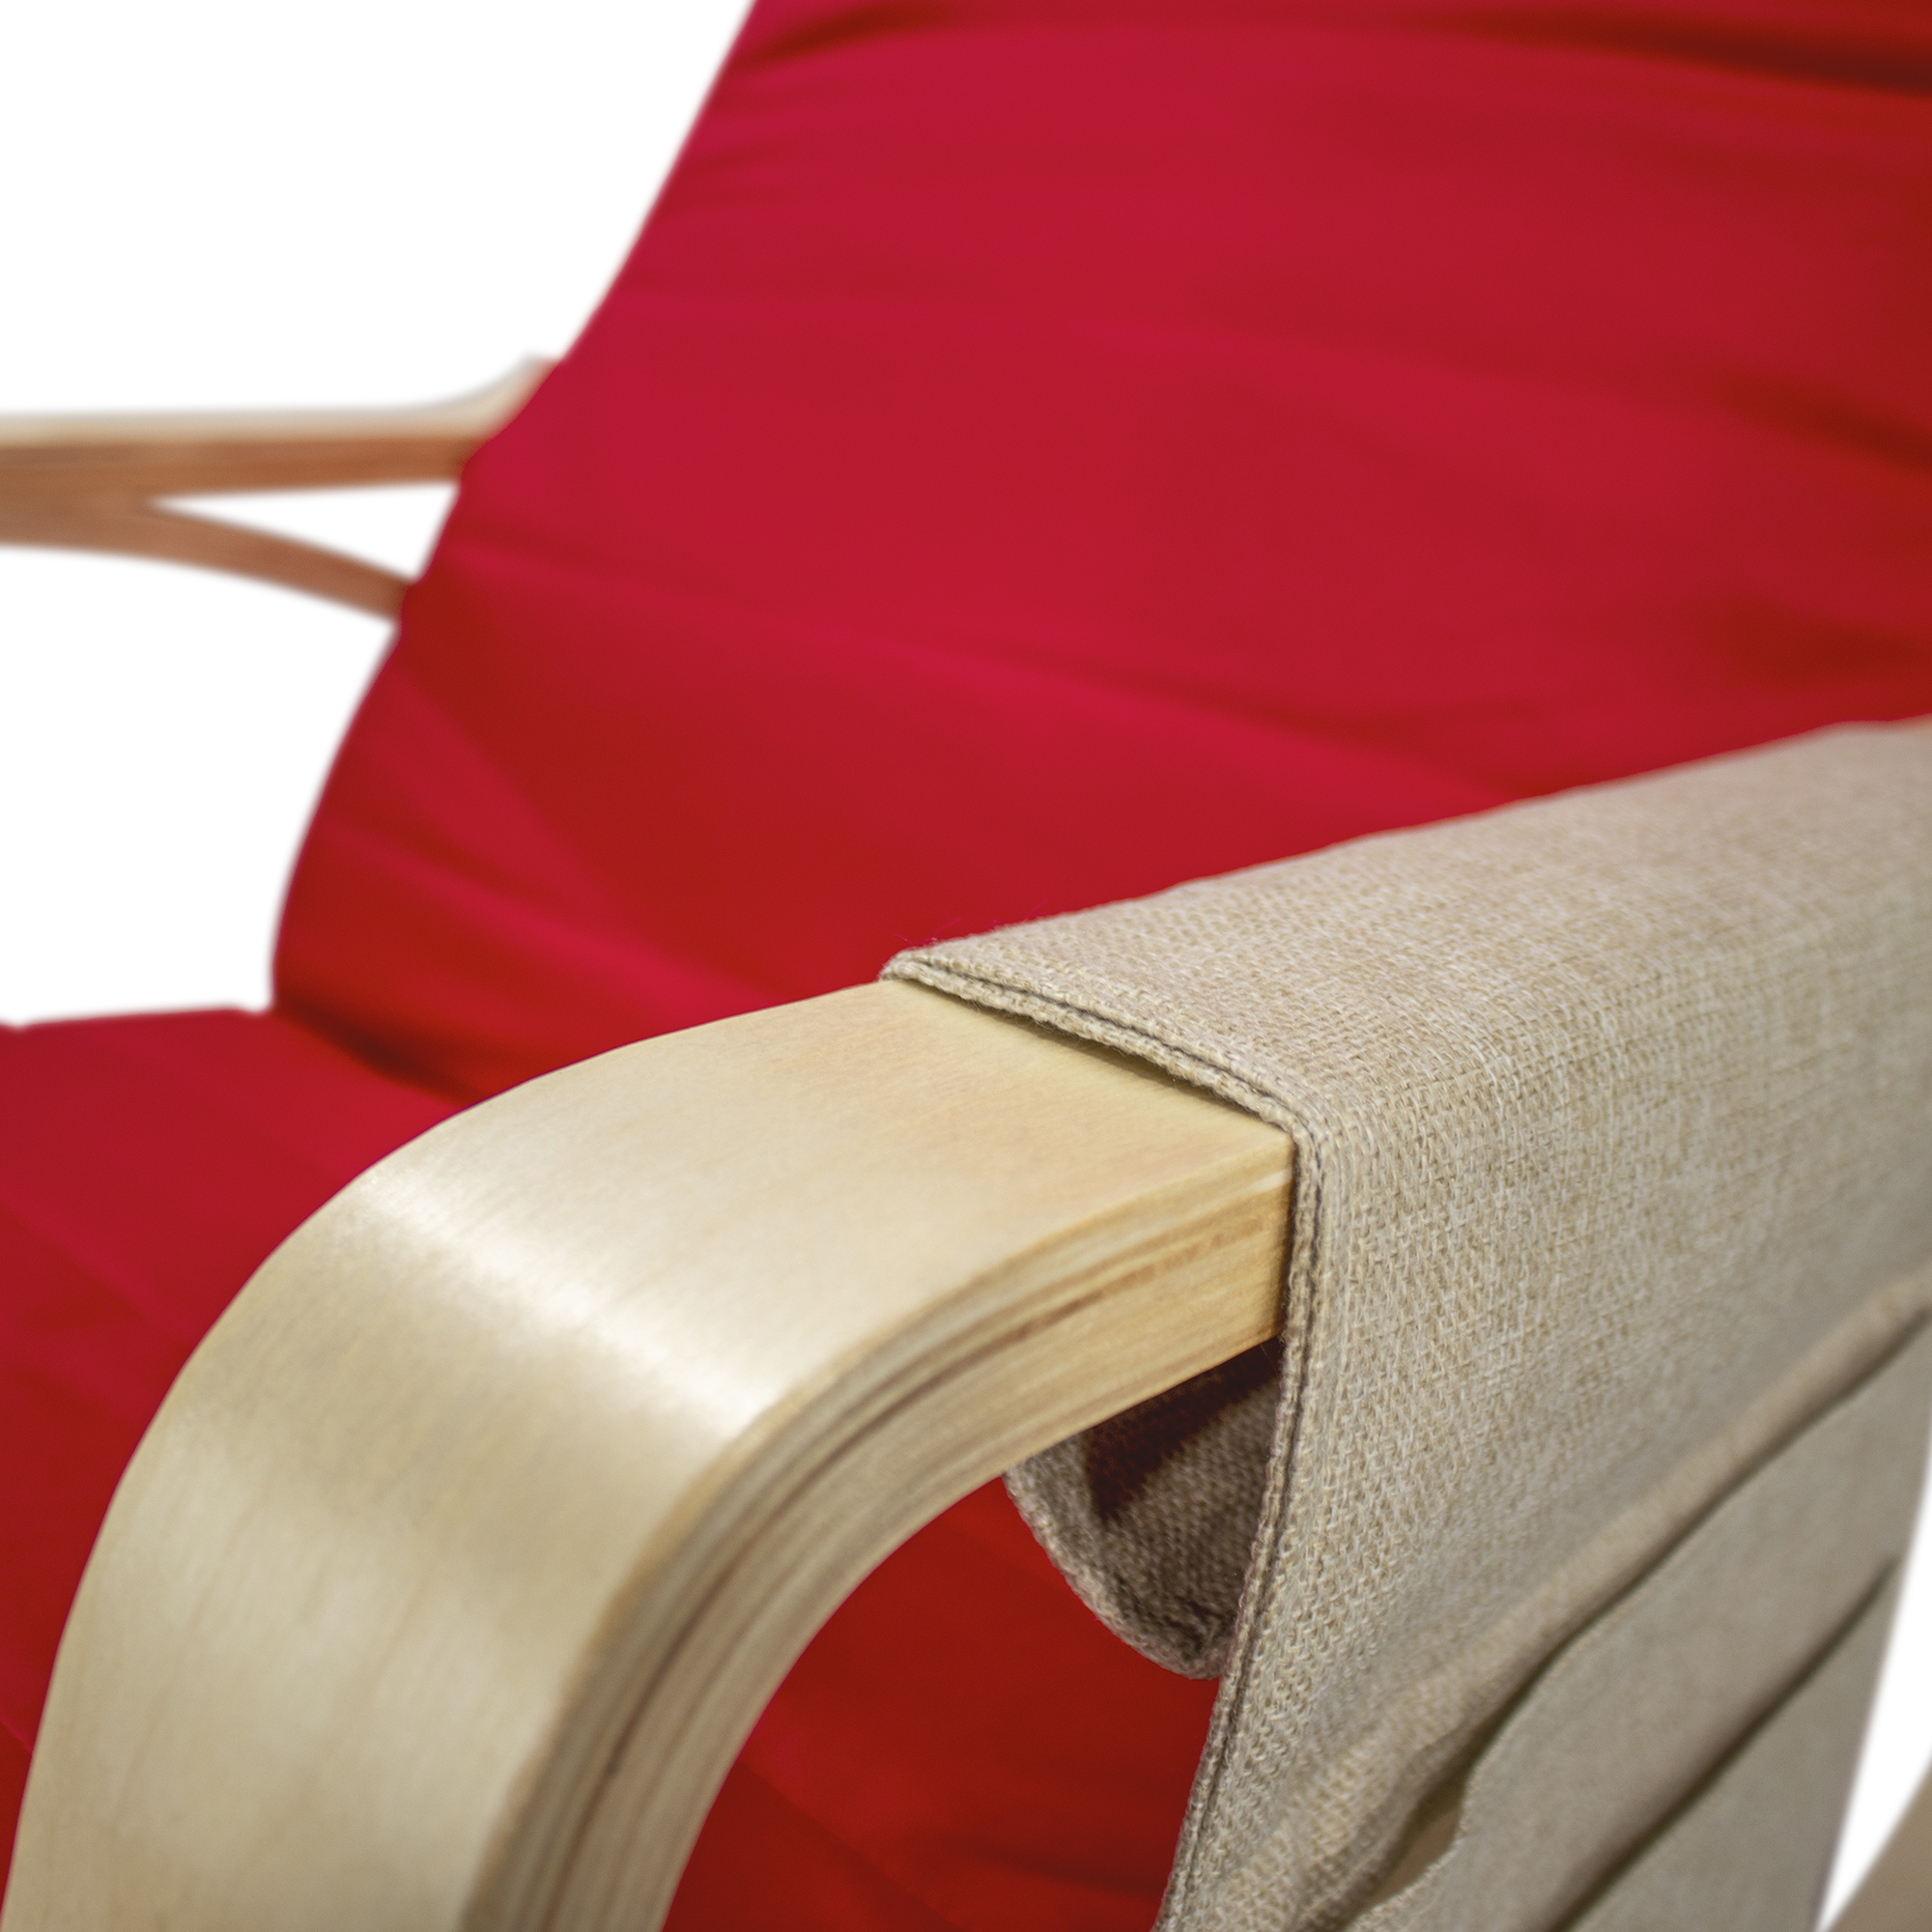 Relaxstuhl Schwingstuhl mit verstellbarem Fussteil D4 - Farbe: Rot